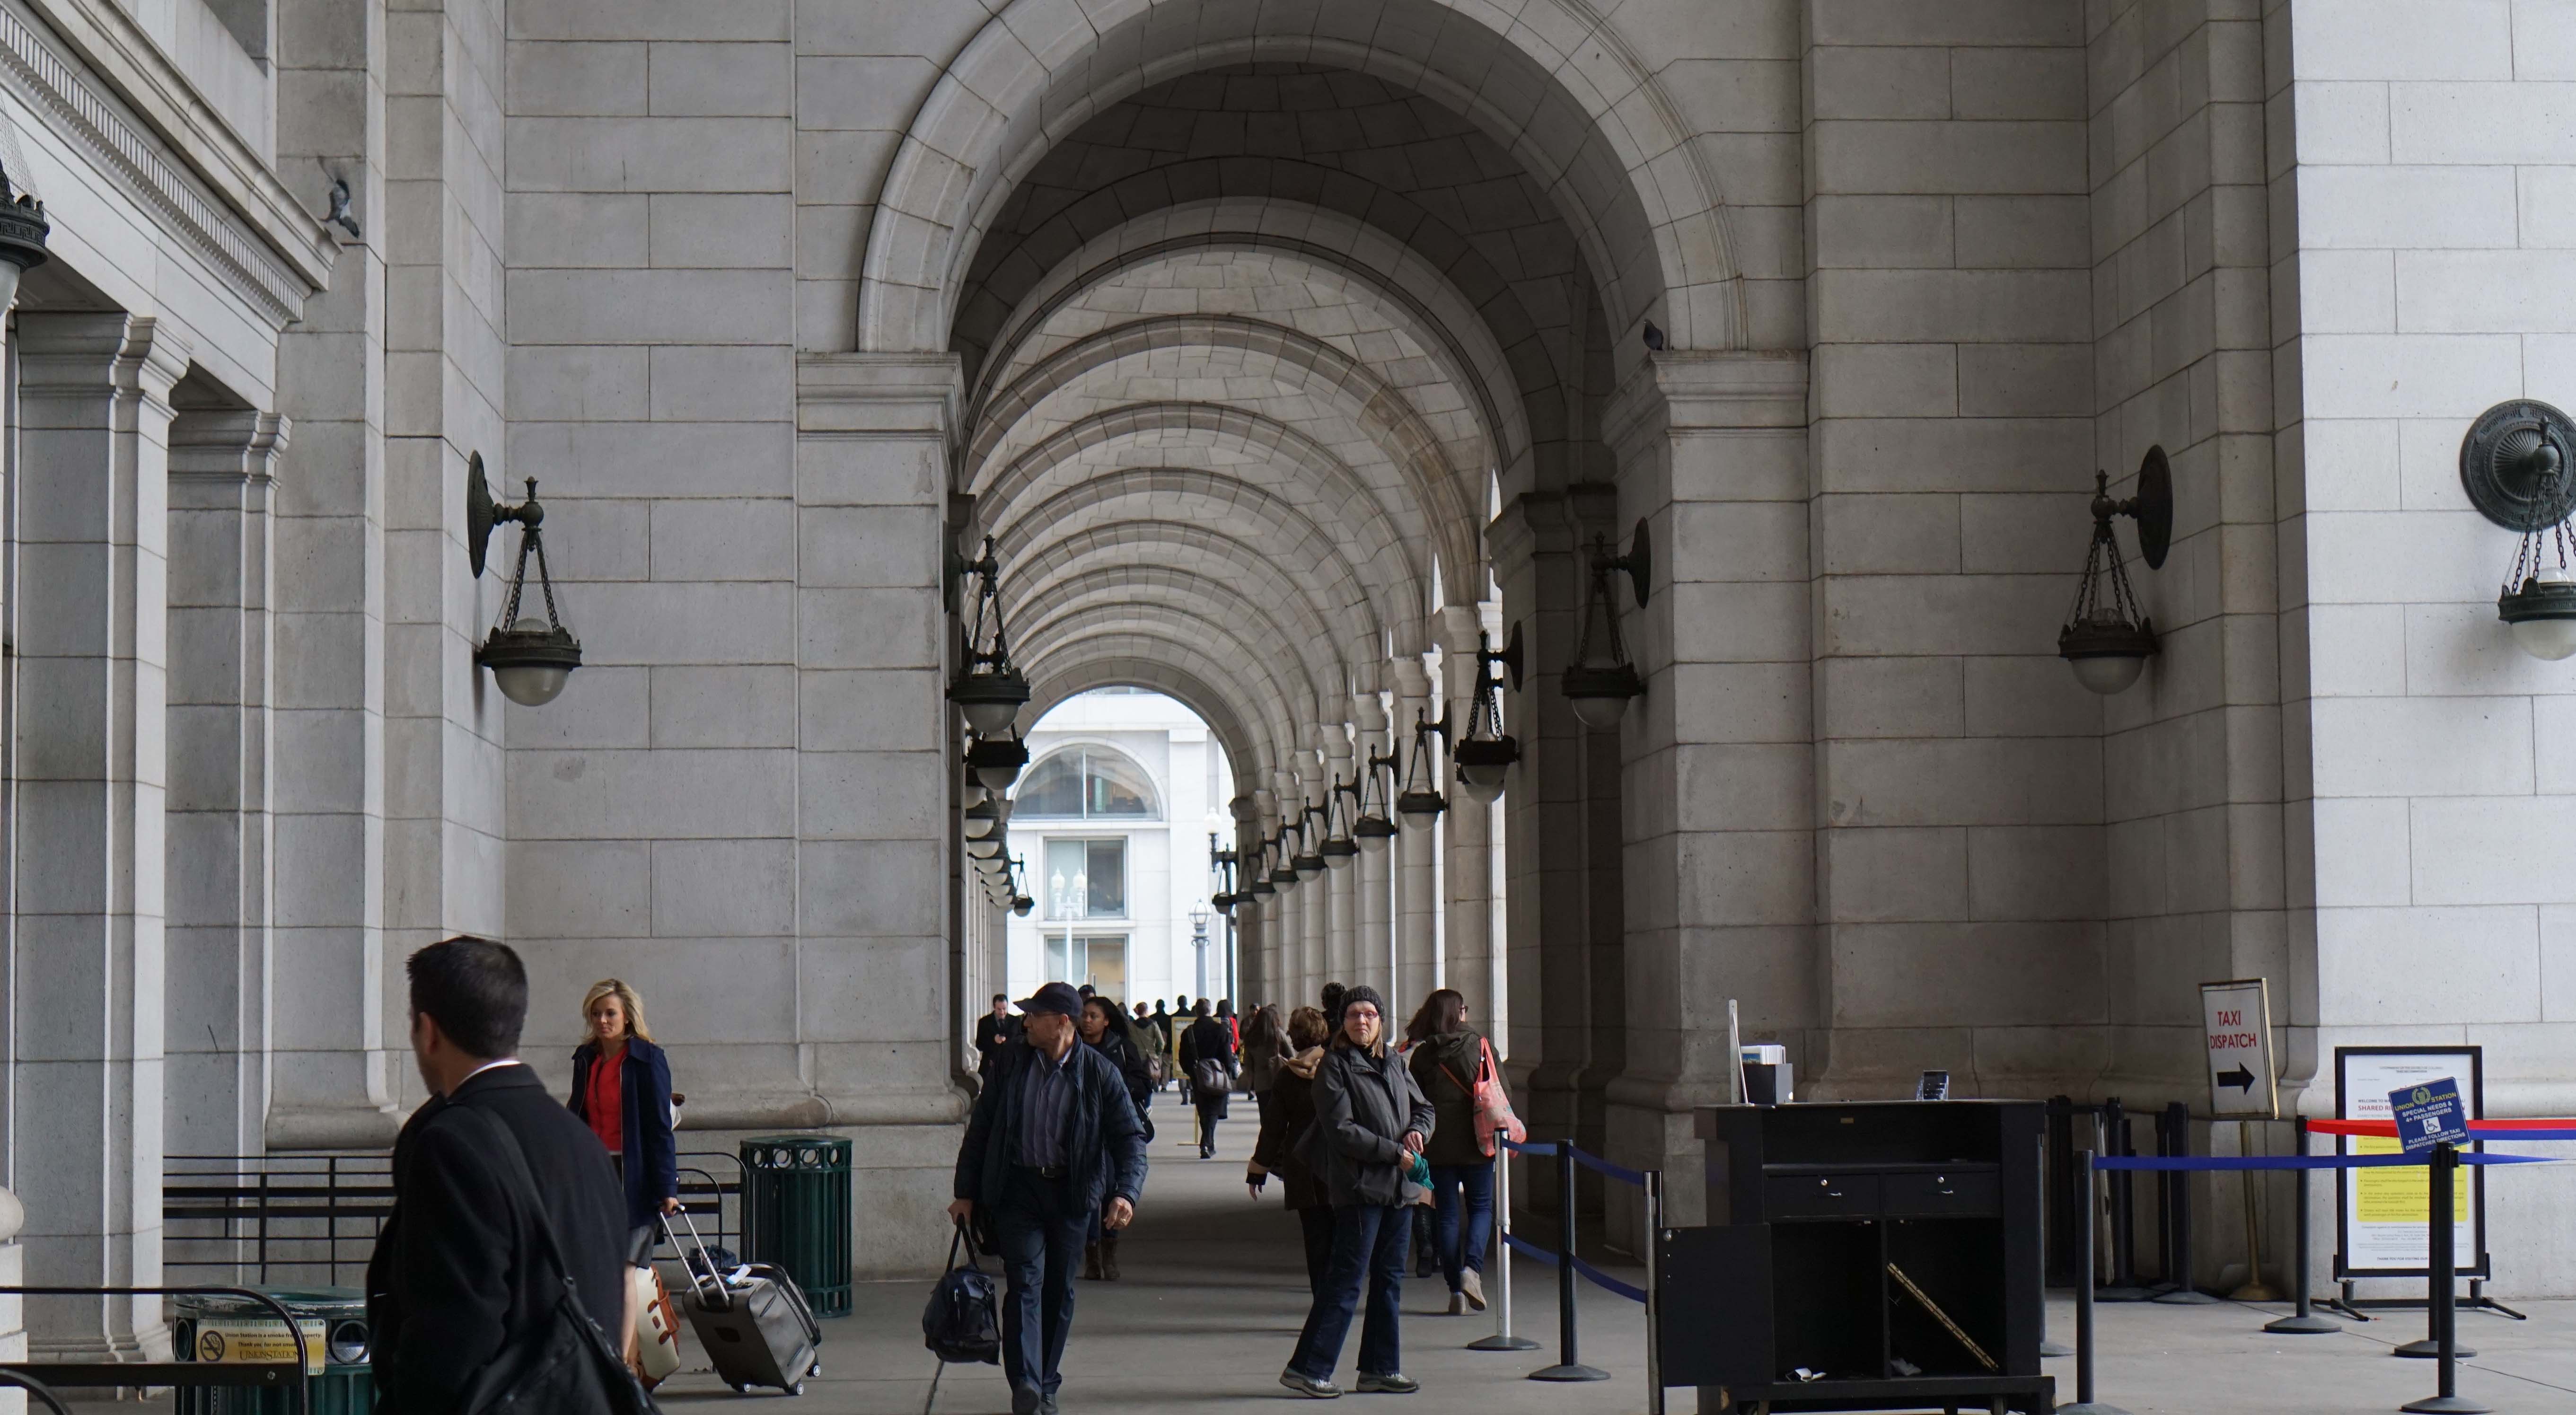 Union Station arches